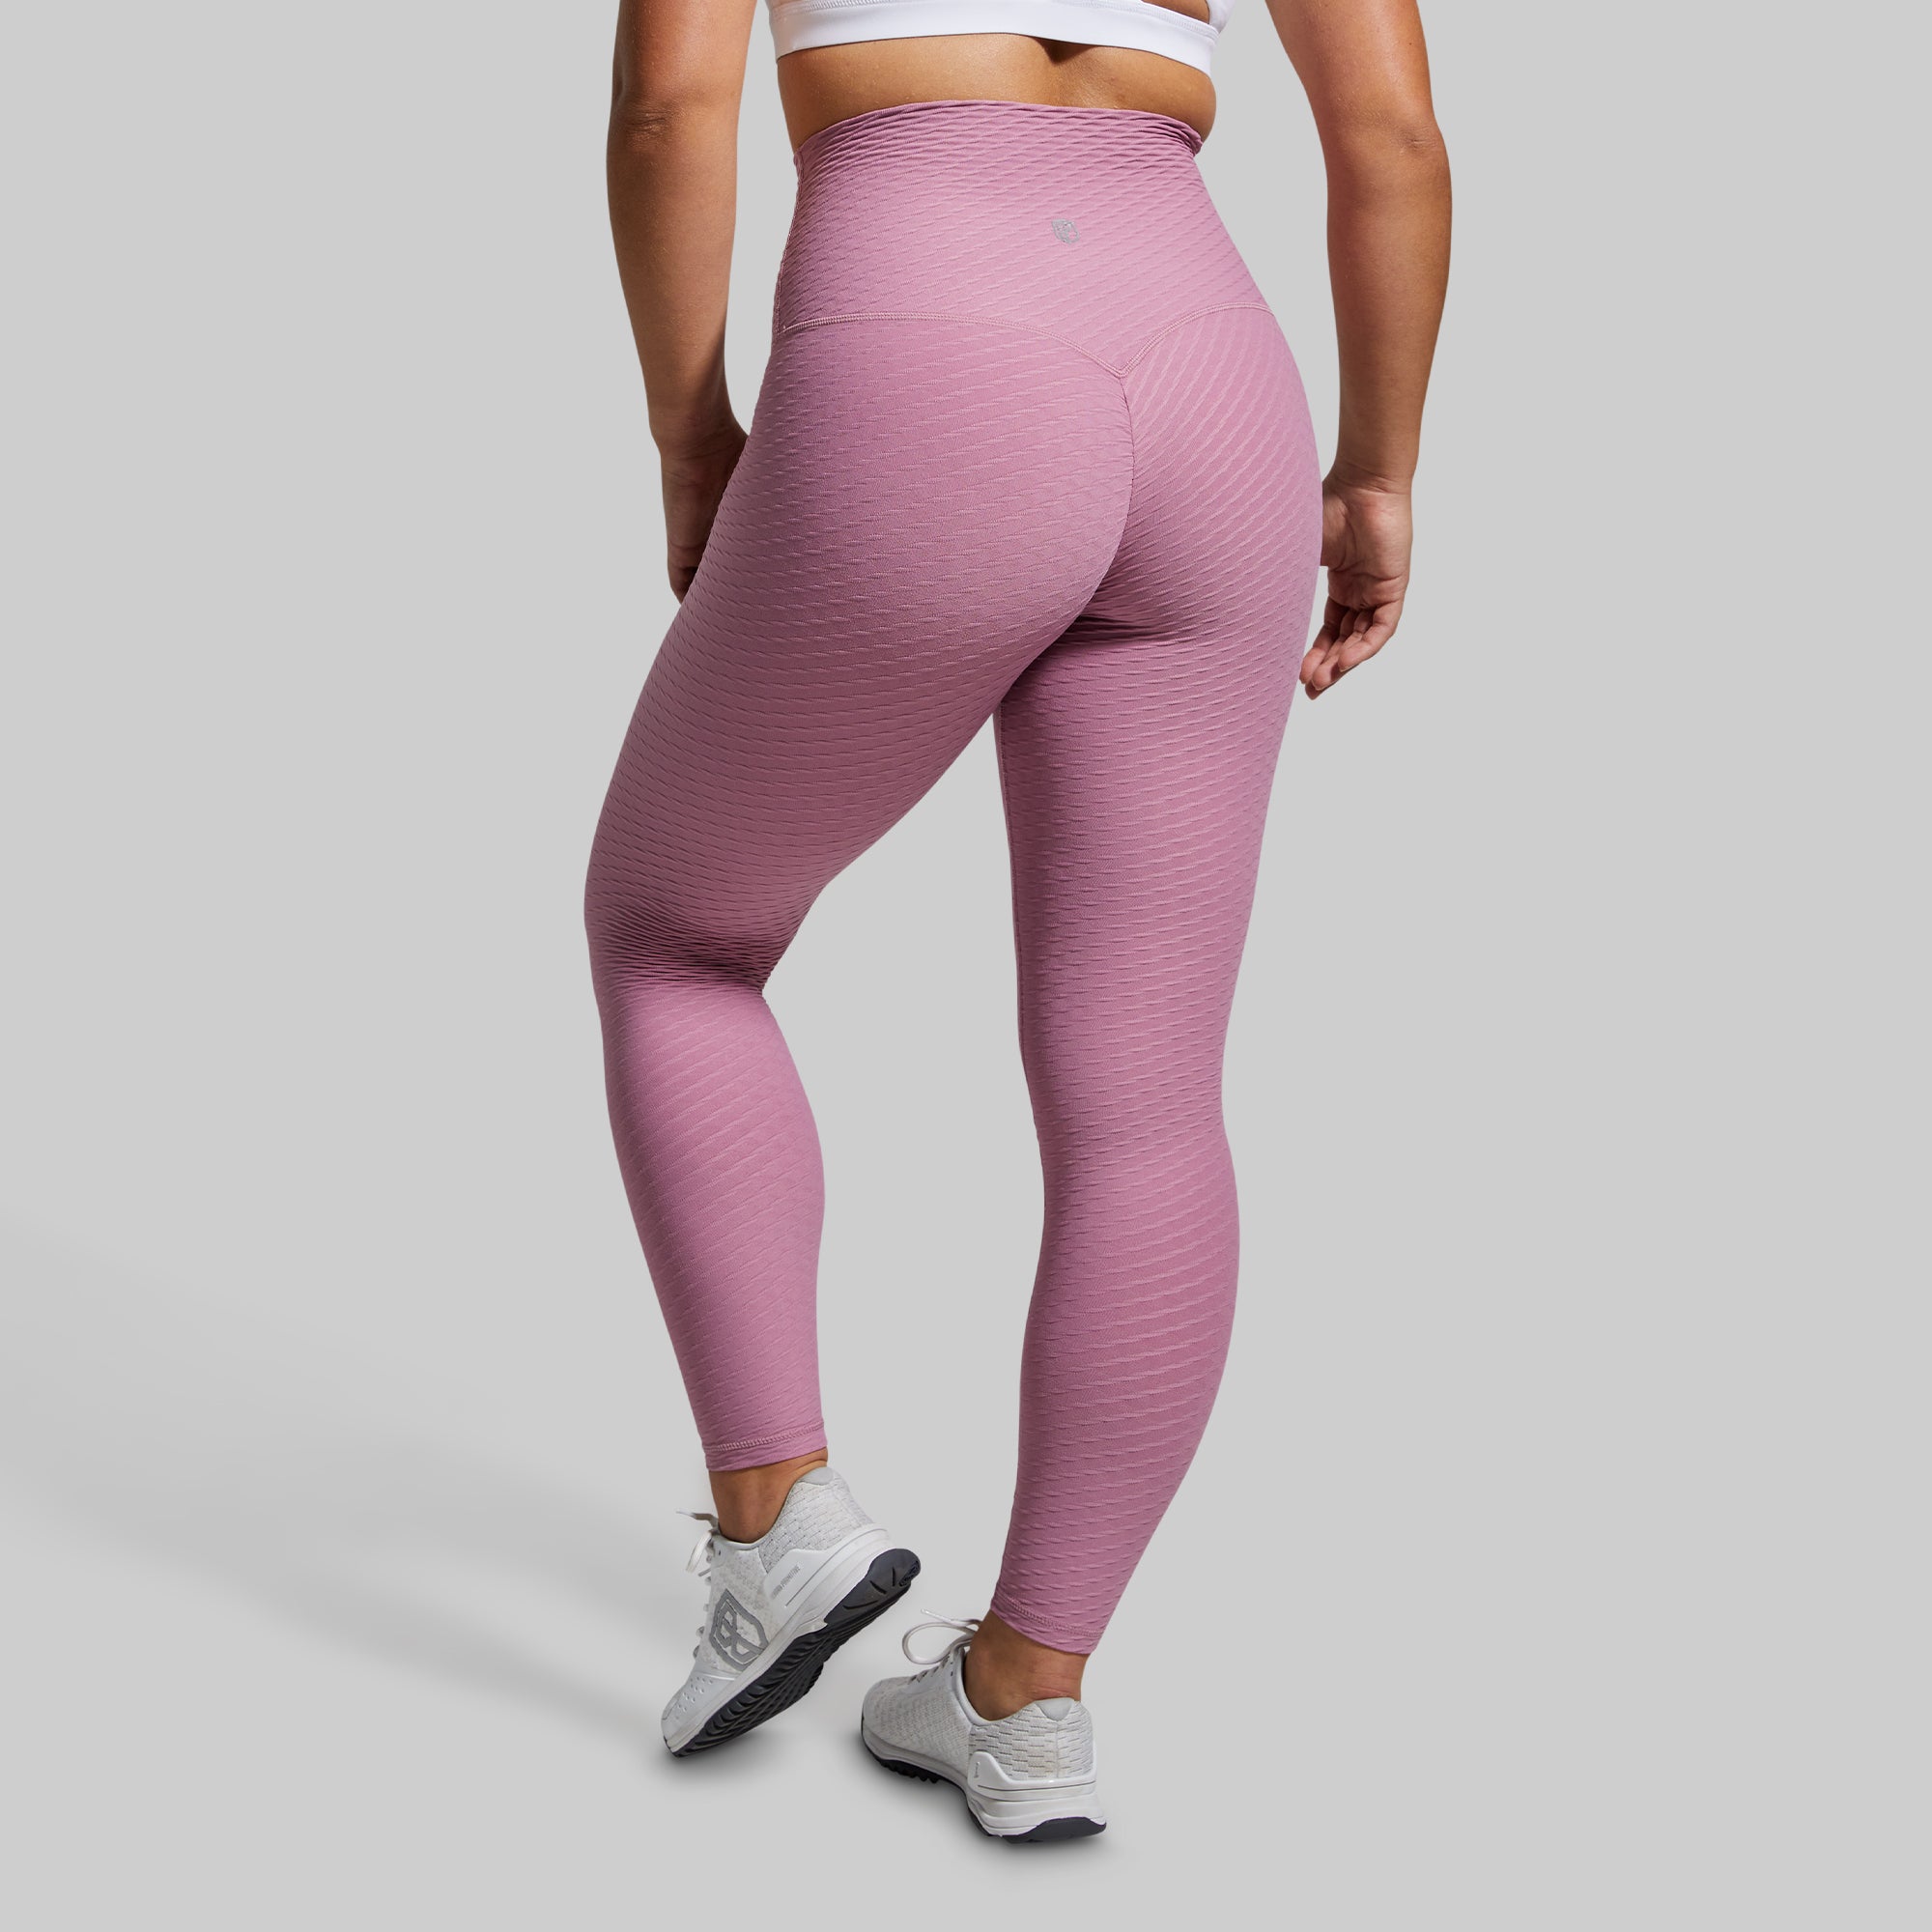 Mauve Gym Leggings, Pink Textured Leggings